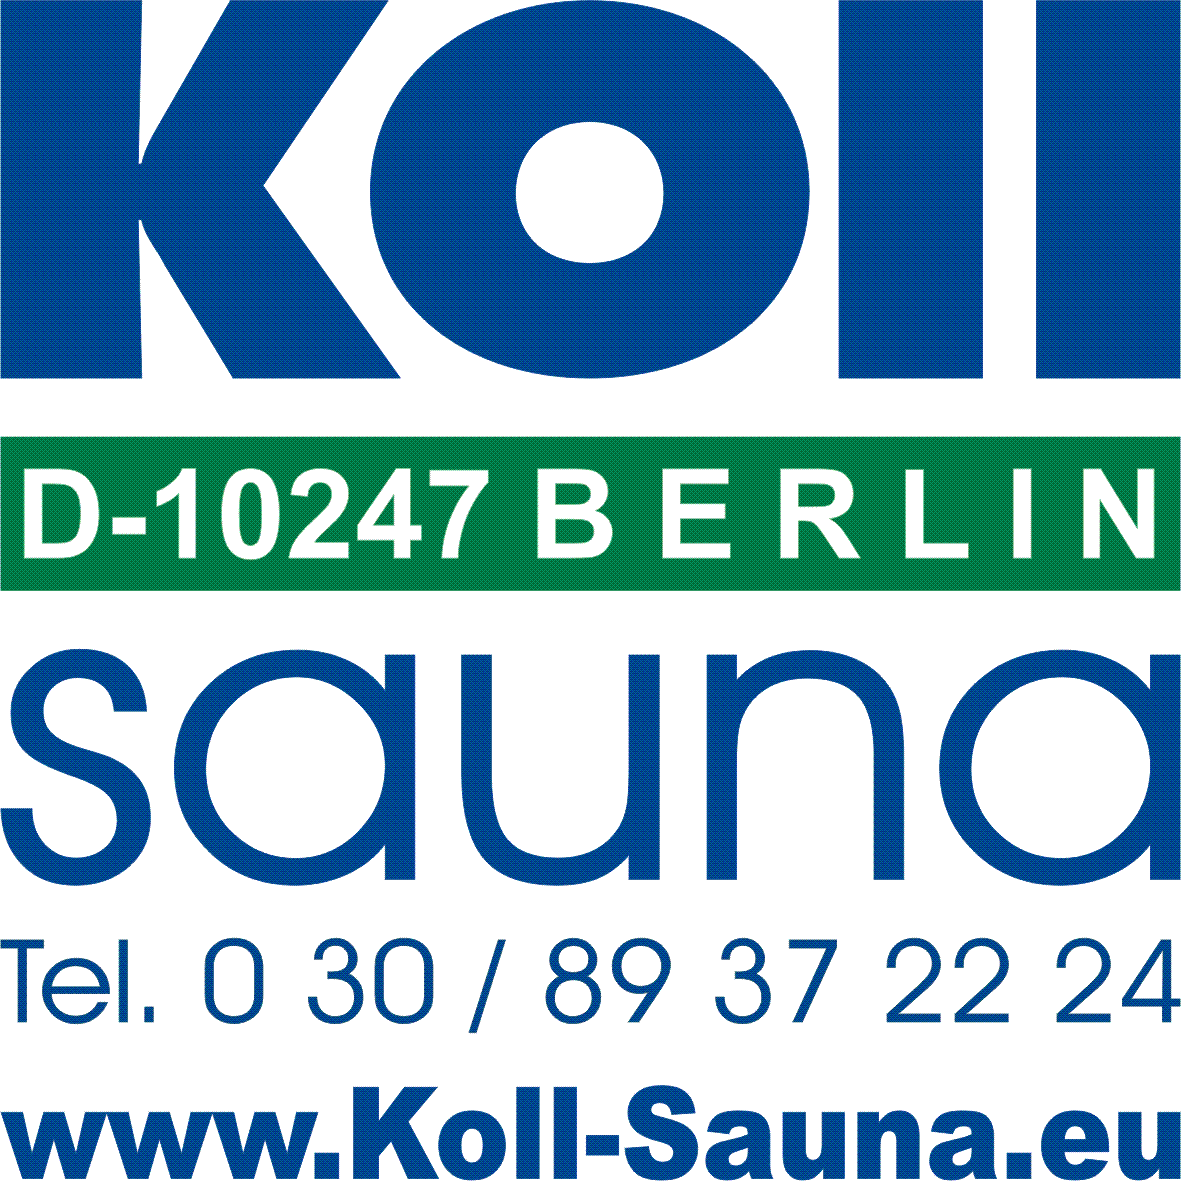 Koll-Sauna  D-33129 Delbrück